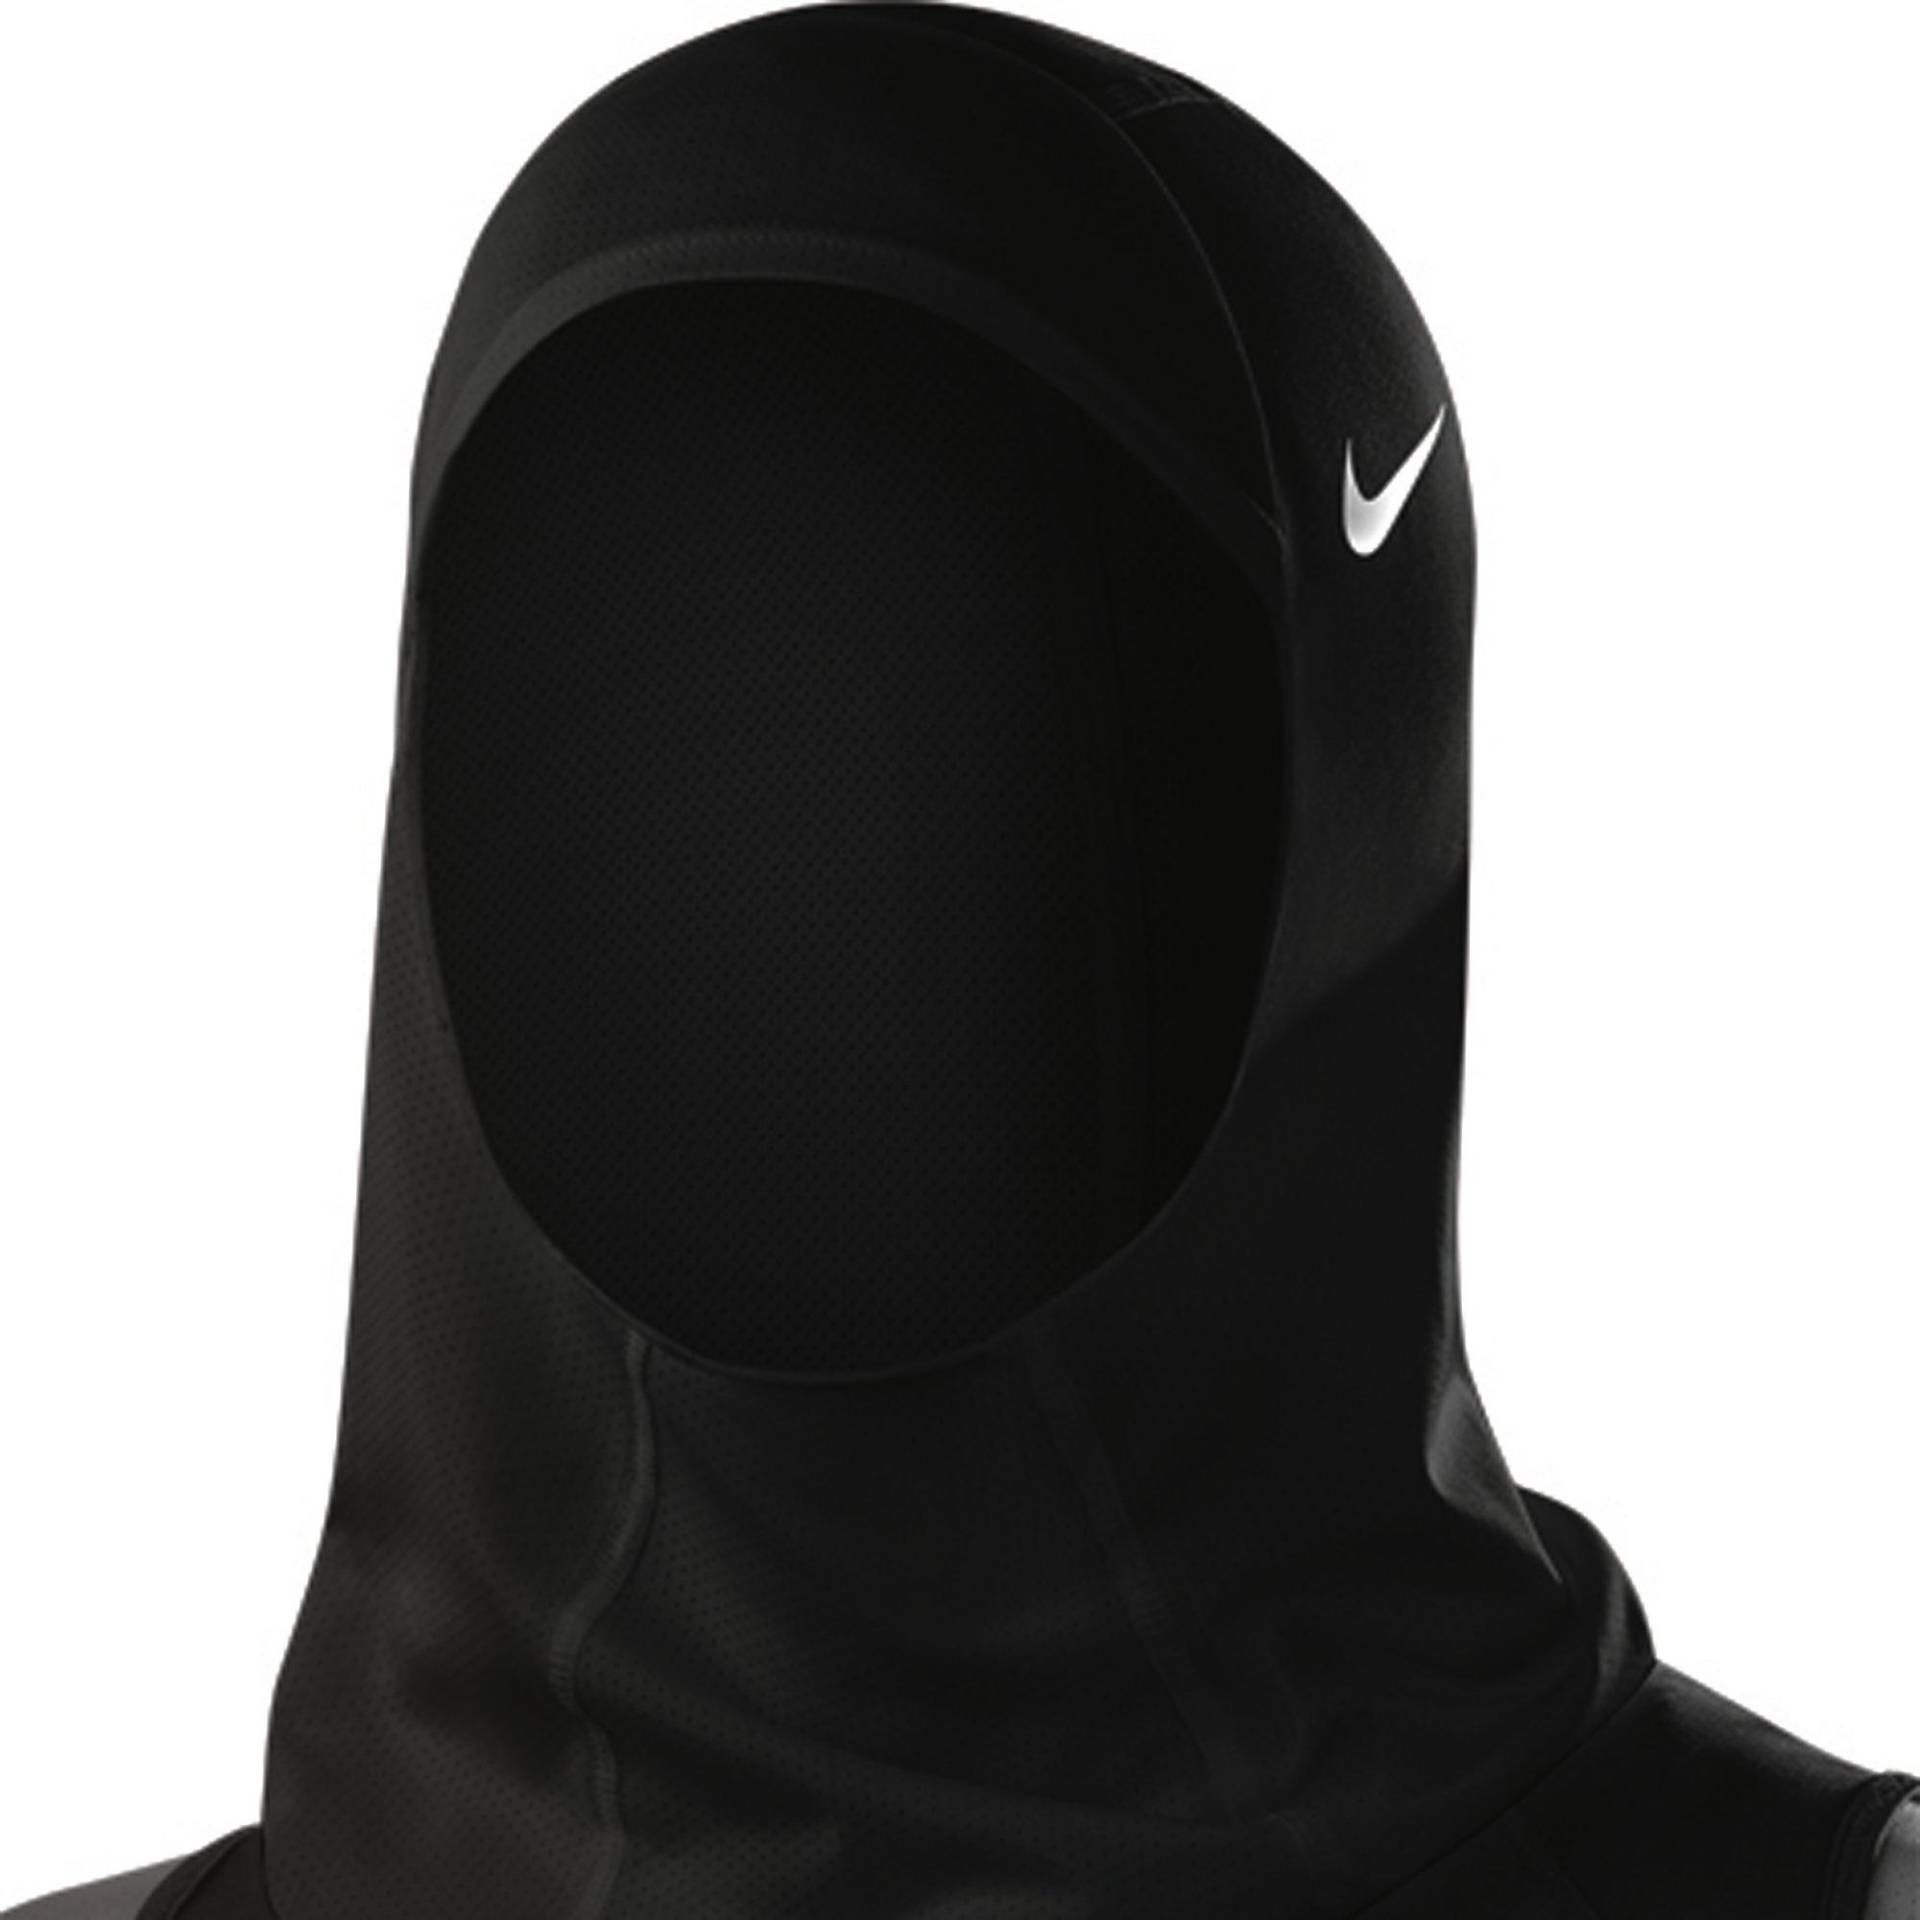 Hijab Damen Black XS/S von NIKE